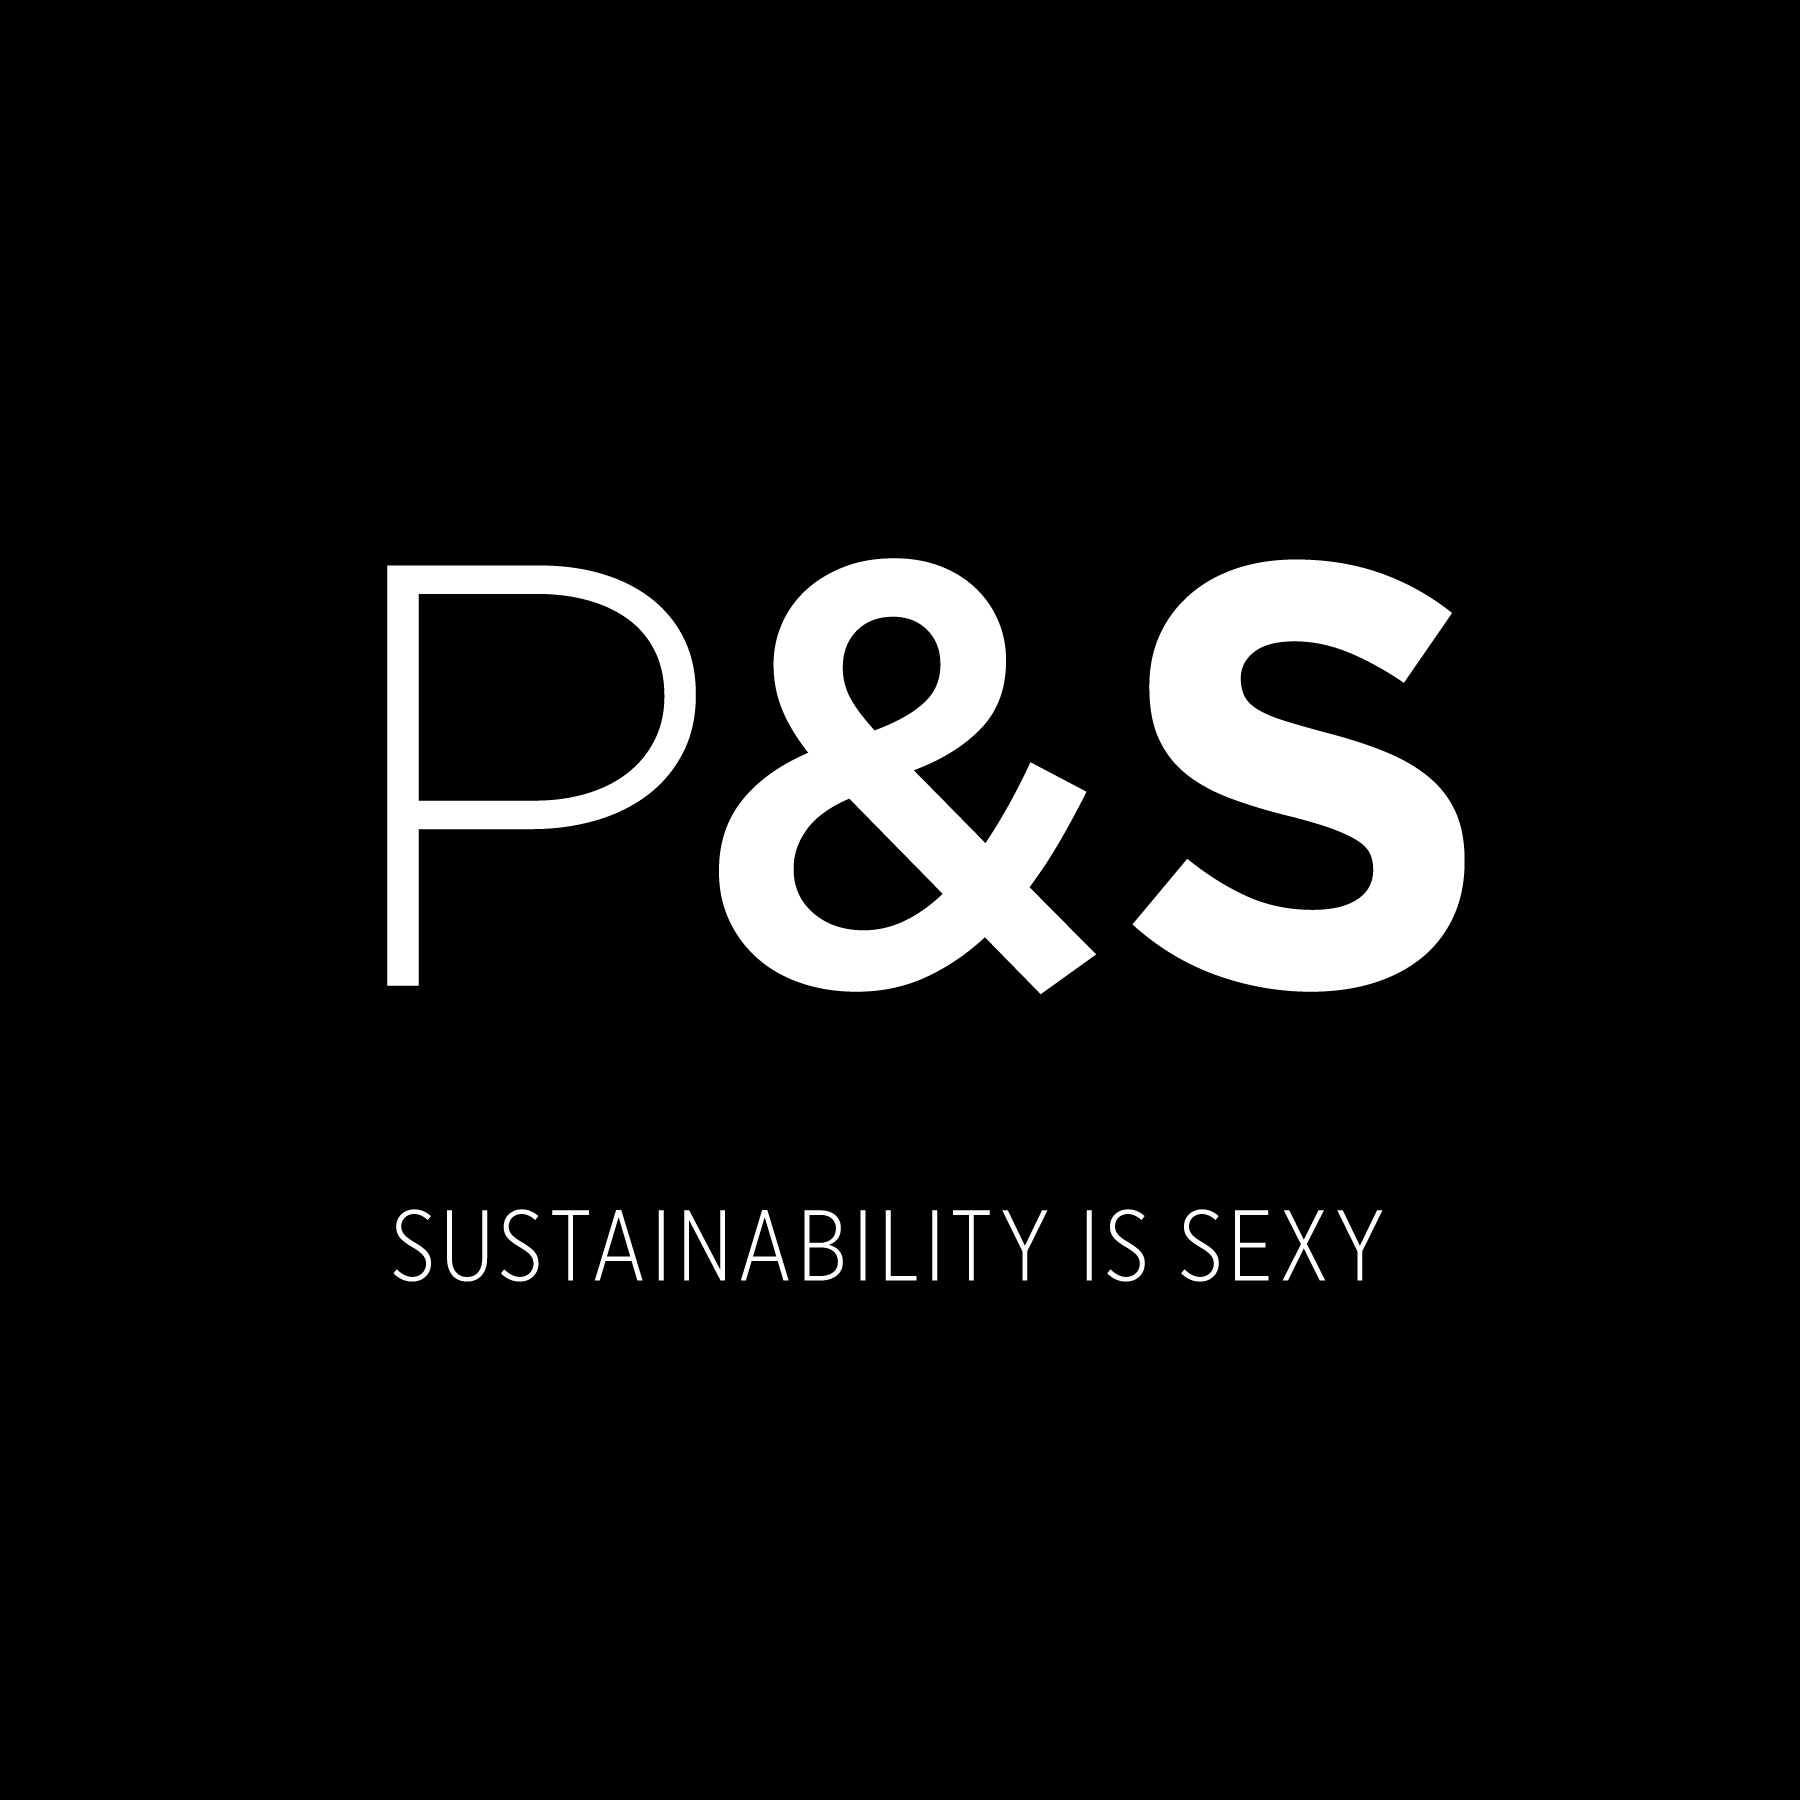 P&S Logo - Sustainability is Sexy.jpg